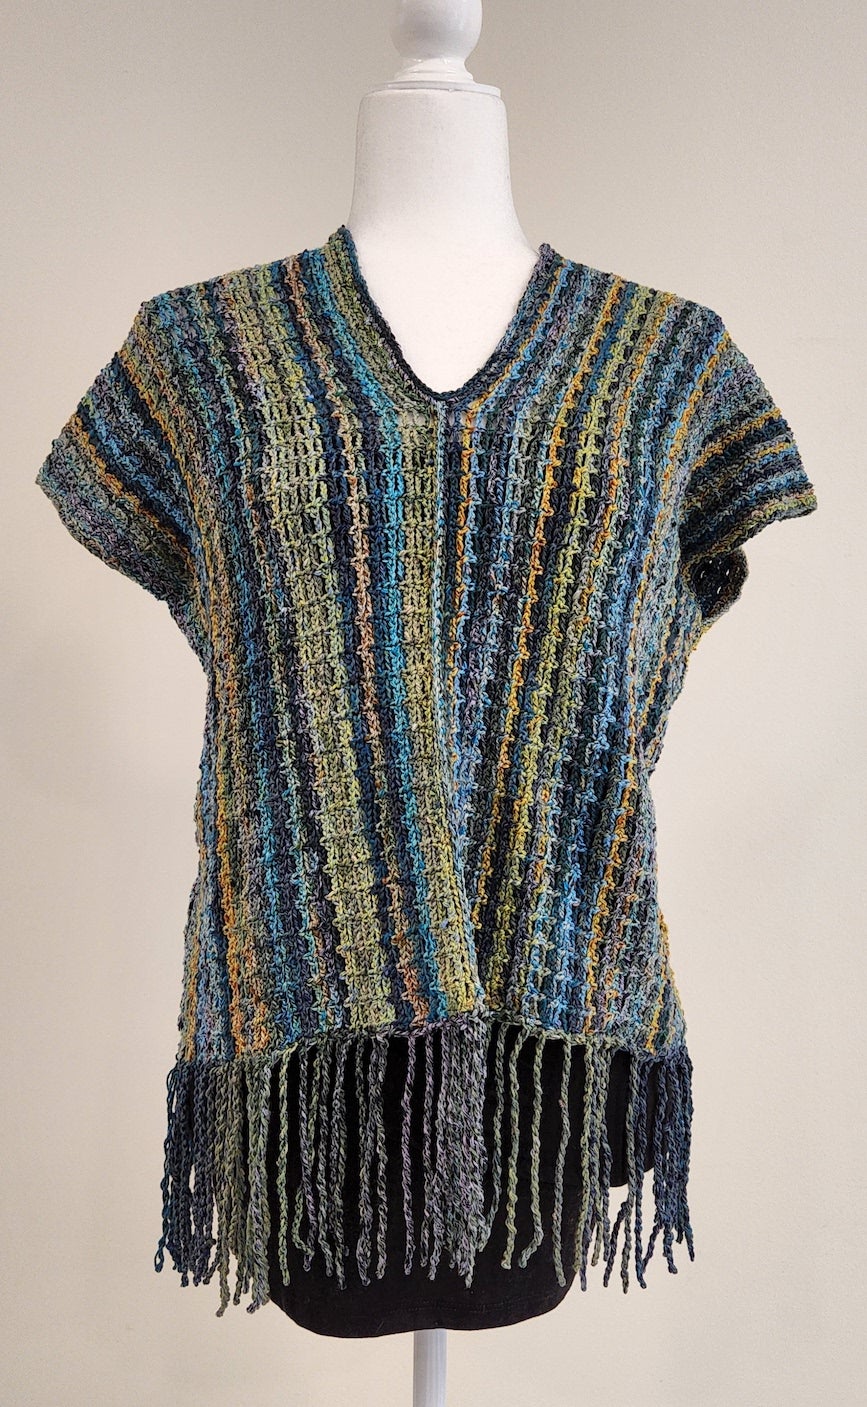 Ravelry: Girl's Heart Bag pattern by Ken Jones-CrochetGuy